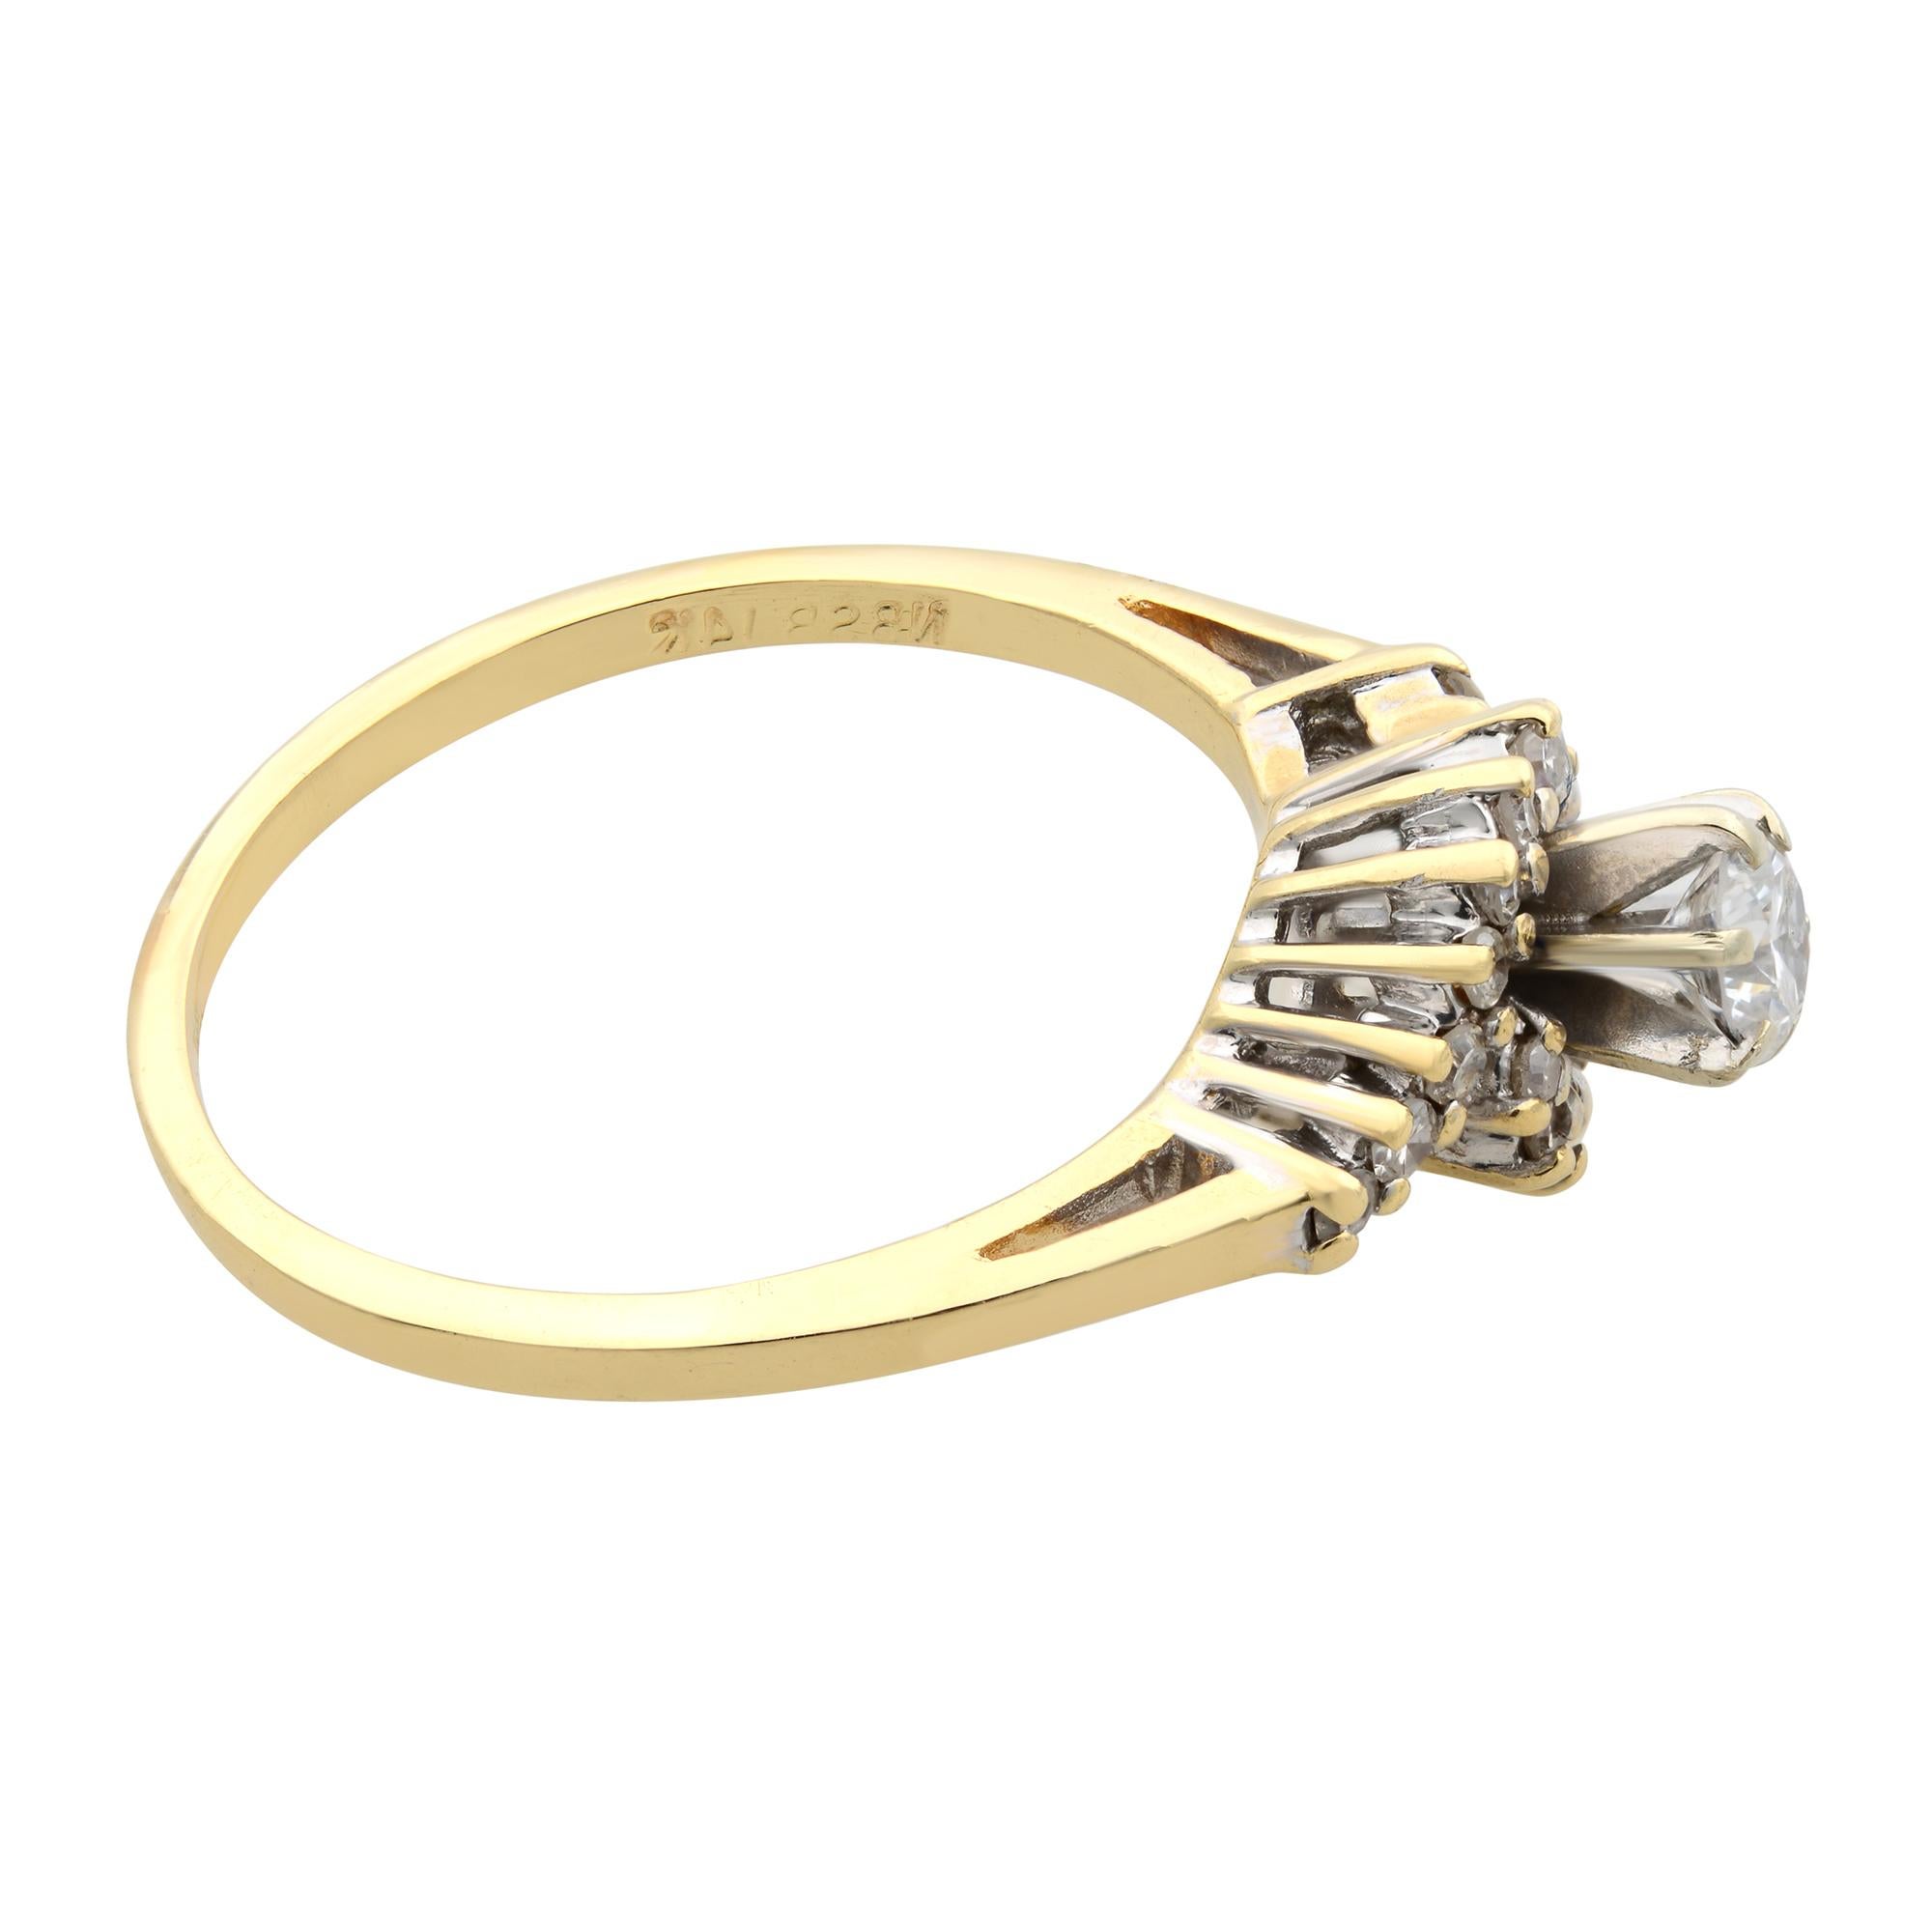 Rachel Koen Ladies Diamond Ring 14K Yellow Gold 0.33cttw In New Condition For Sale In New York, NY